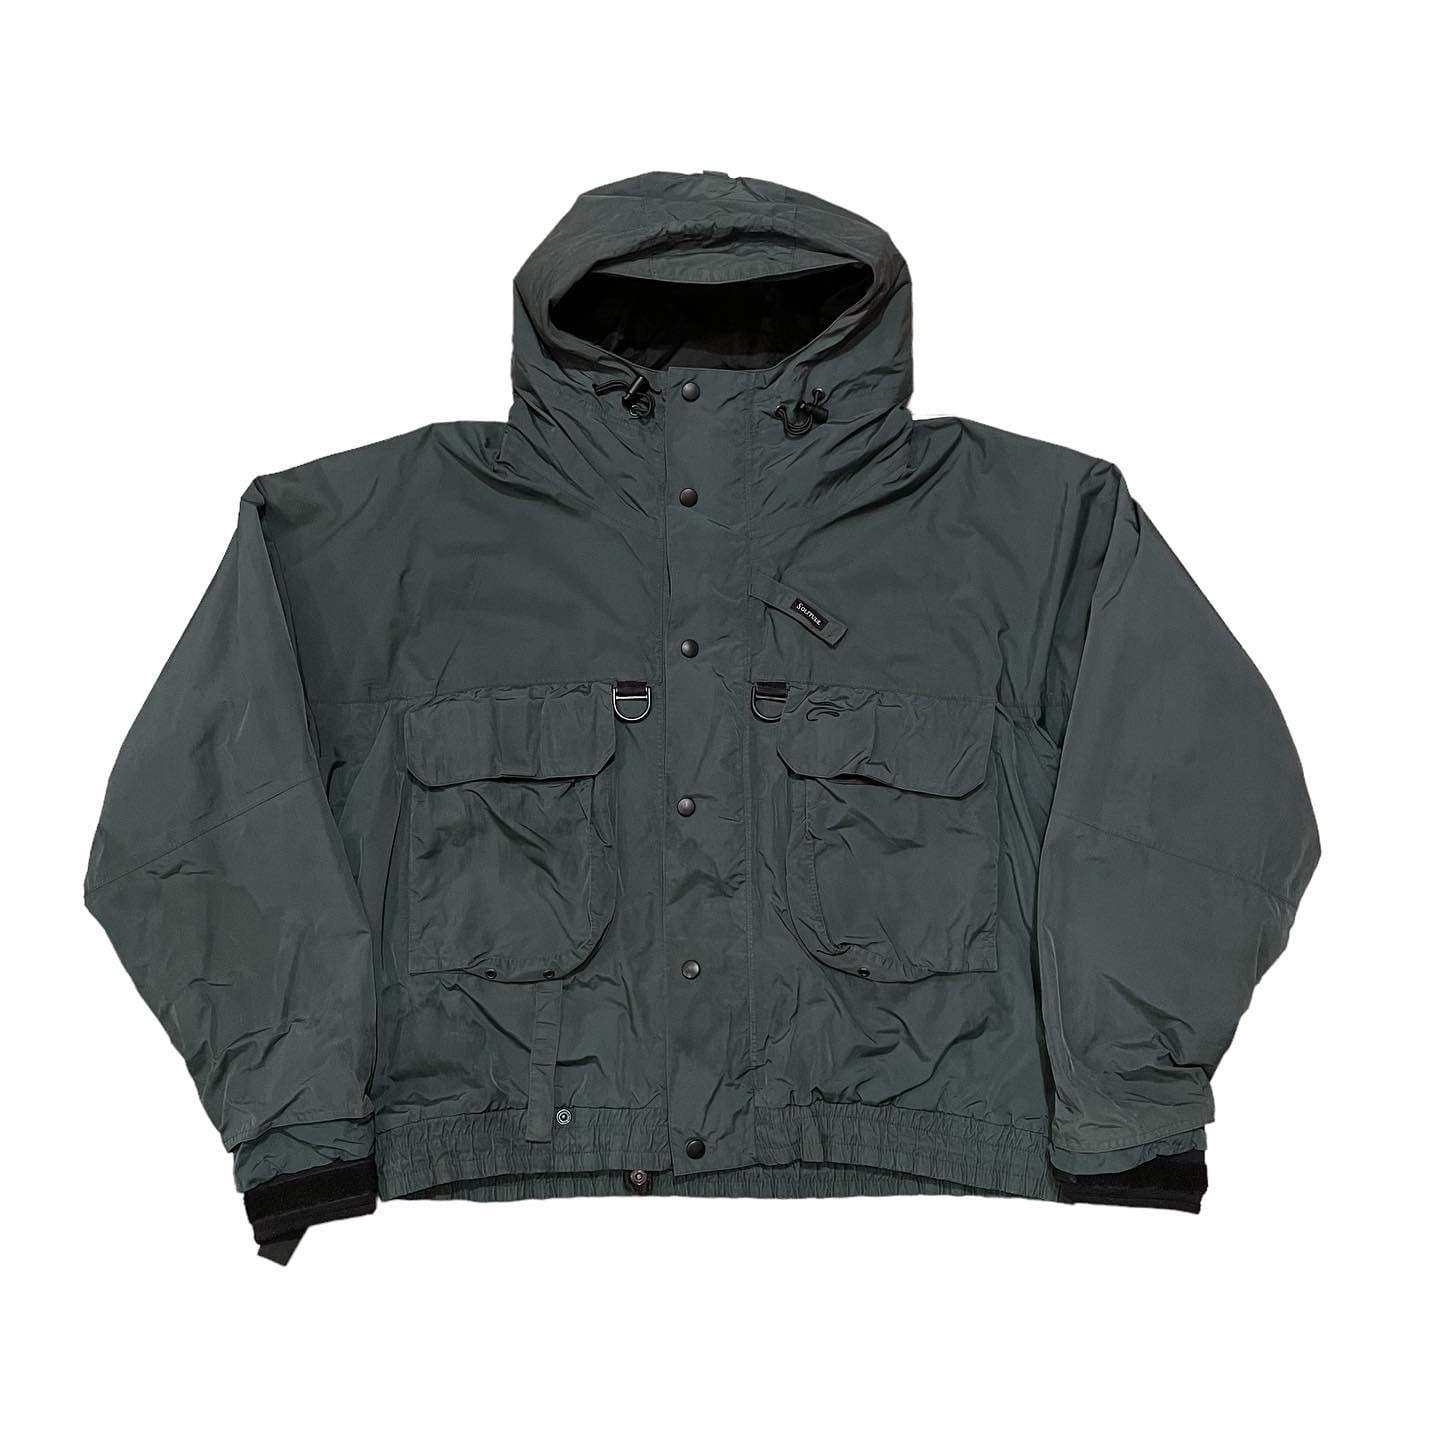 90s SOLITUDE FLY COMPANY SST JKT type fishing jacket